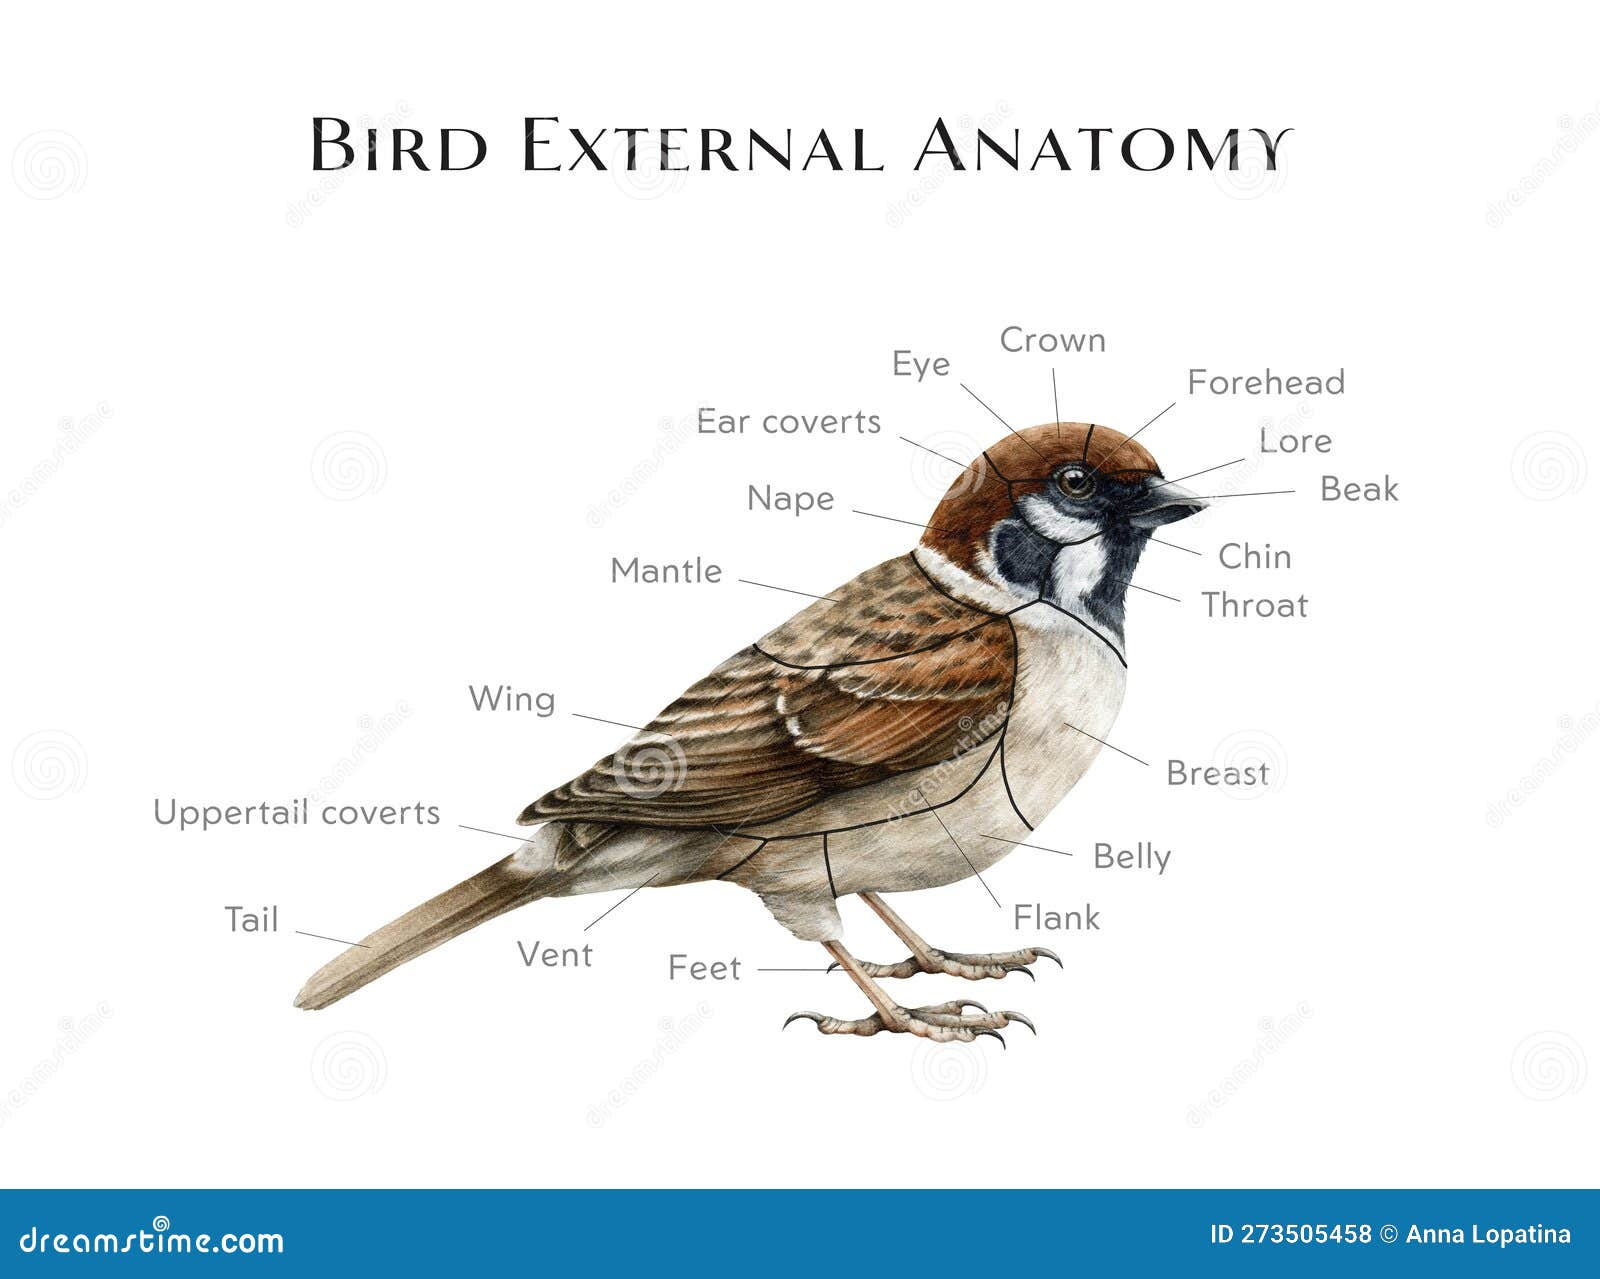 avian anatomy diagram